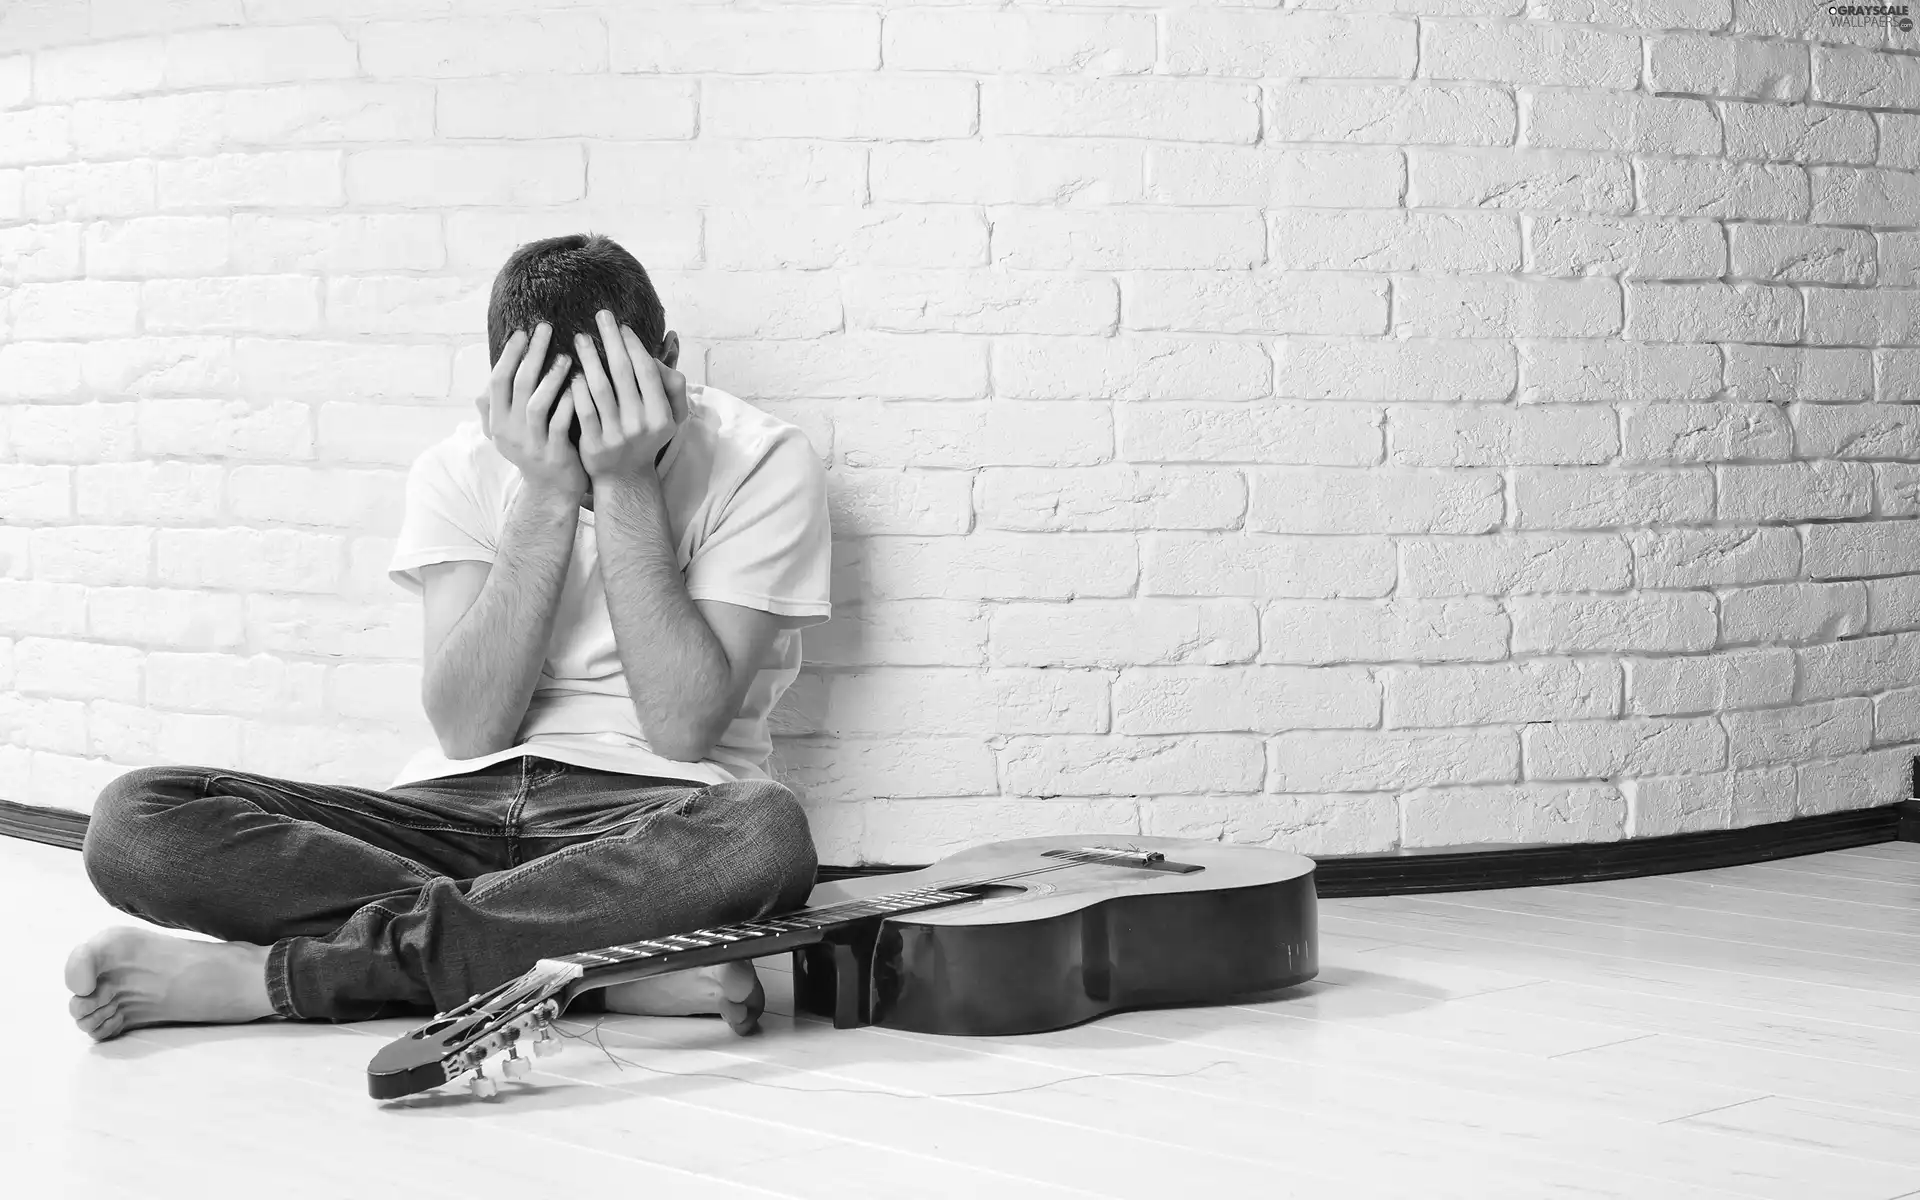 brick, Guitar, a man, wall, sad